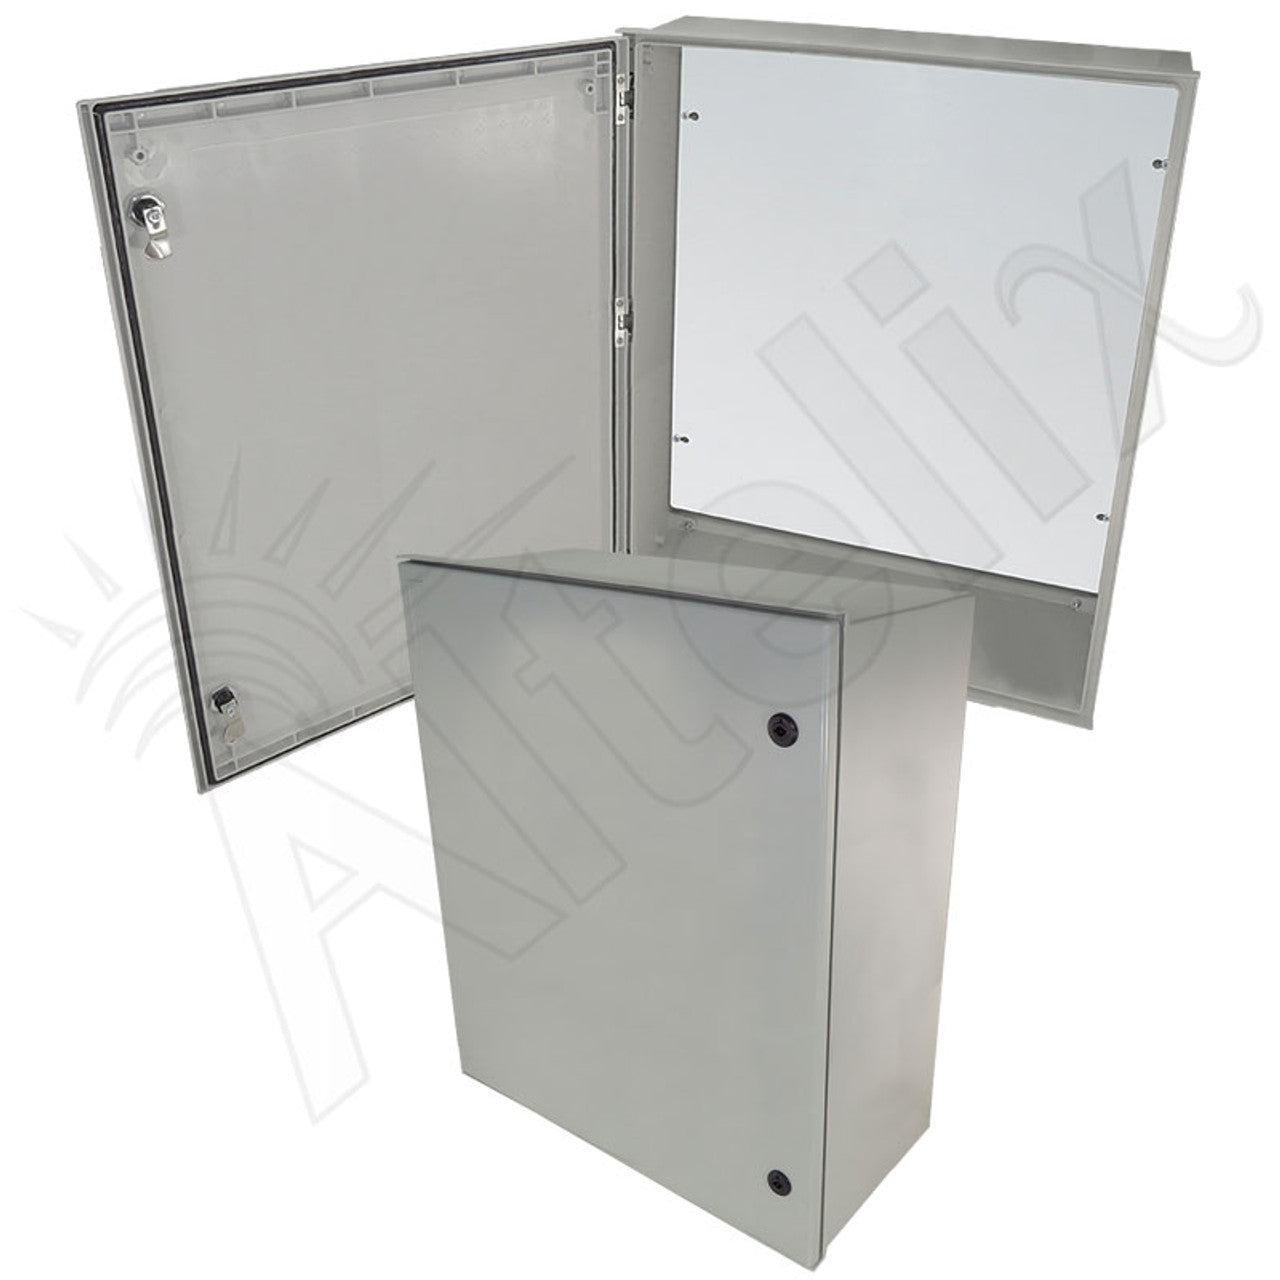 Altelix NEMA 3X Fiberglass Indoor / Outdoor RF Transparent WiFi Access Point Enclosure with Non-Metallic Equipment Mounting Plate-8